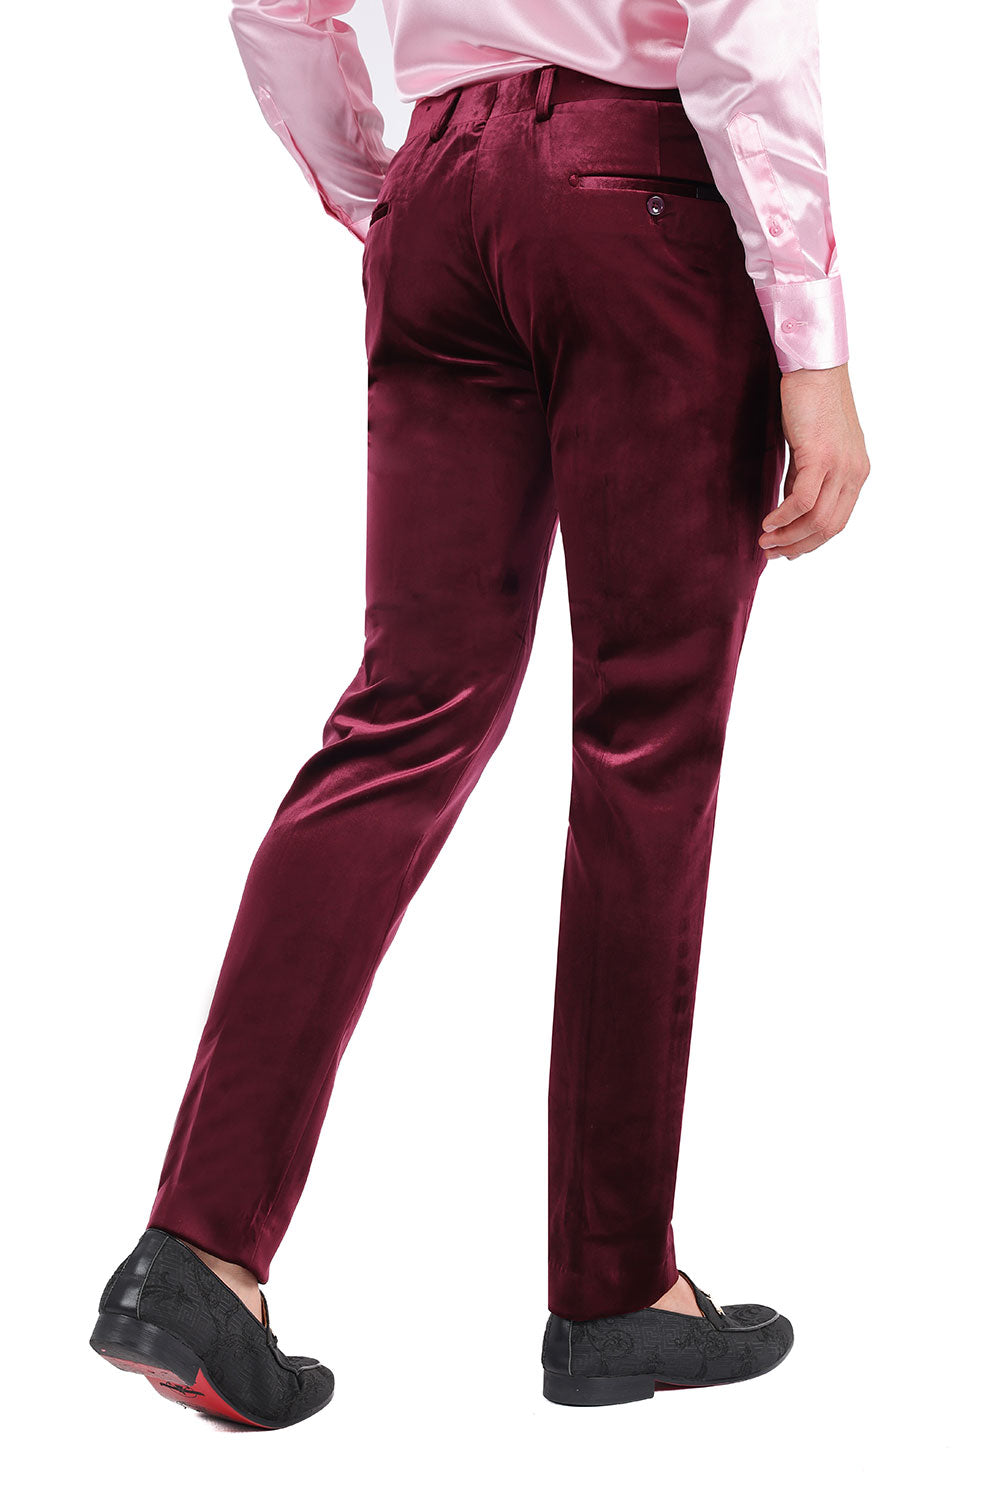 Barabas Men's Velvet Shiny Chino Solid Color Dress Pants 3CP06 Wine